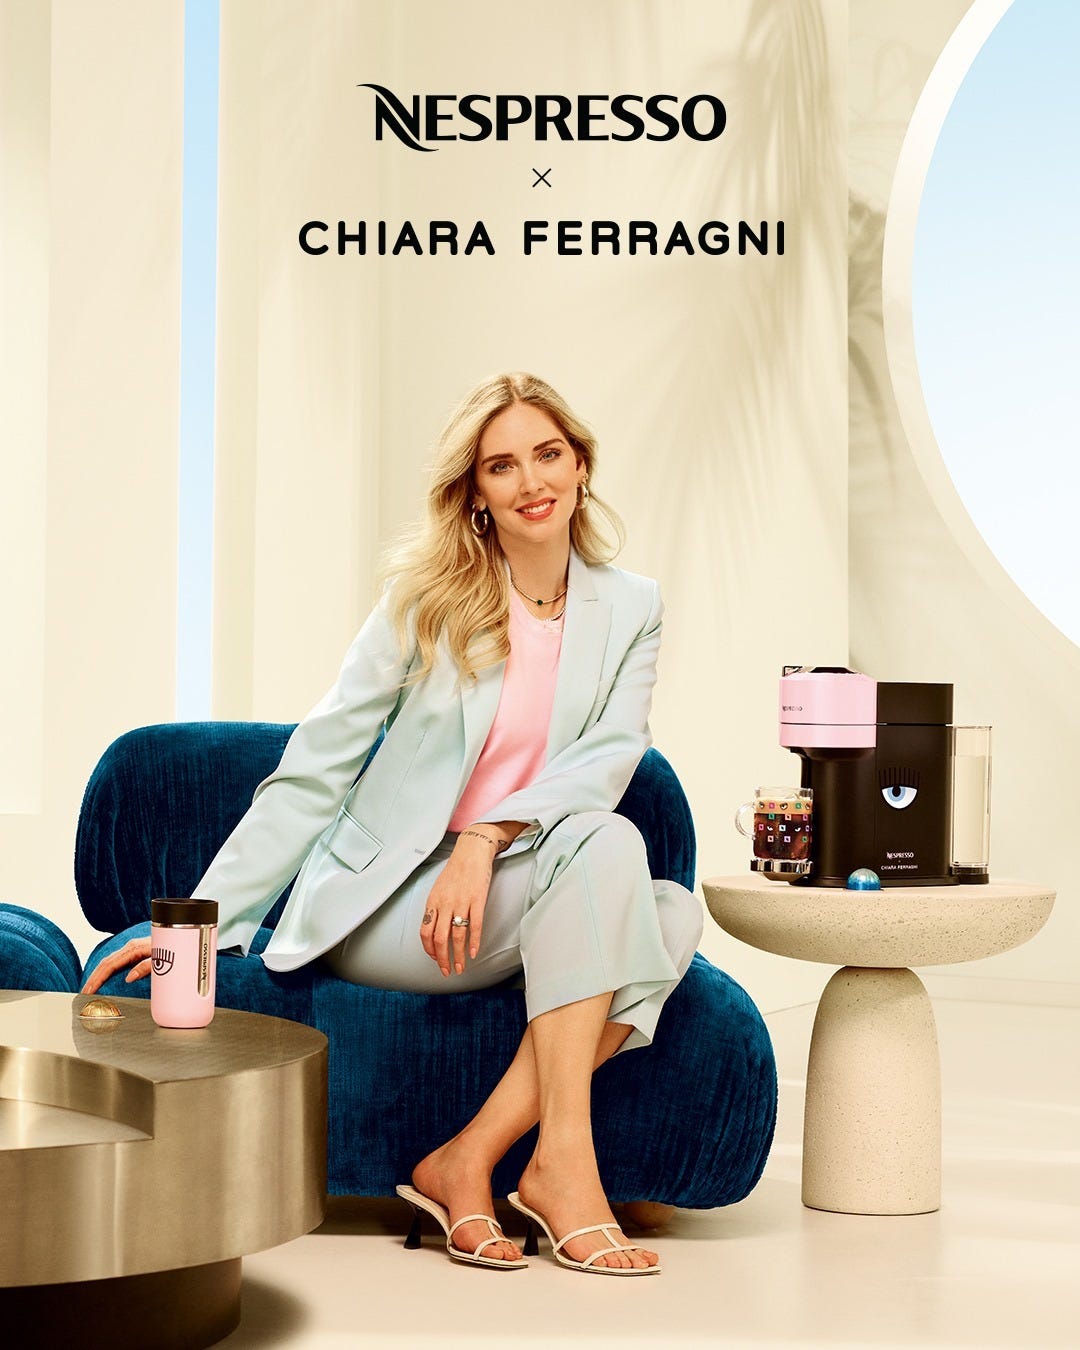 Nespresso x Chiara Ferragni, Coffee with style